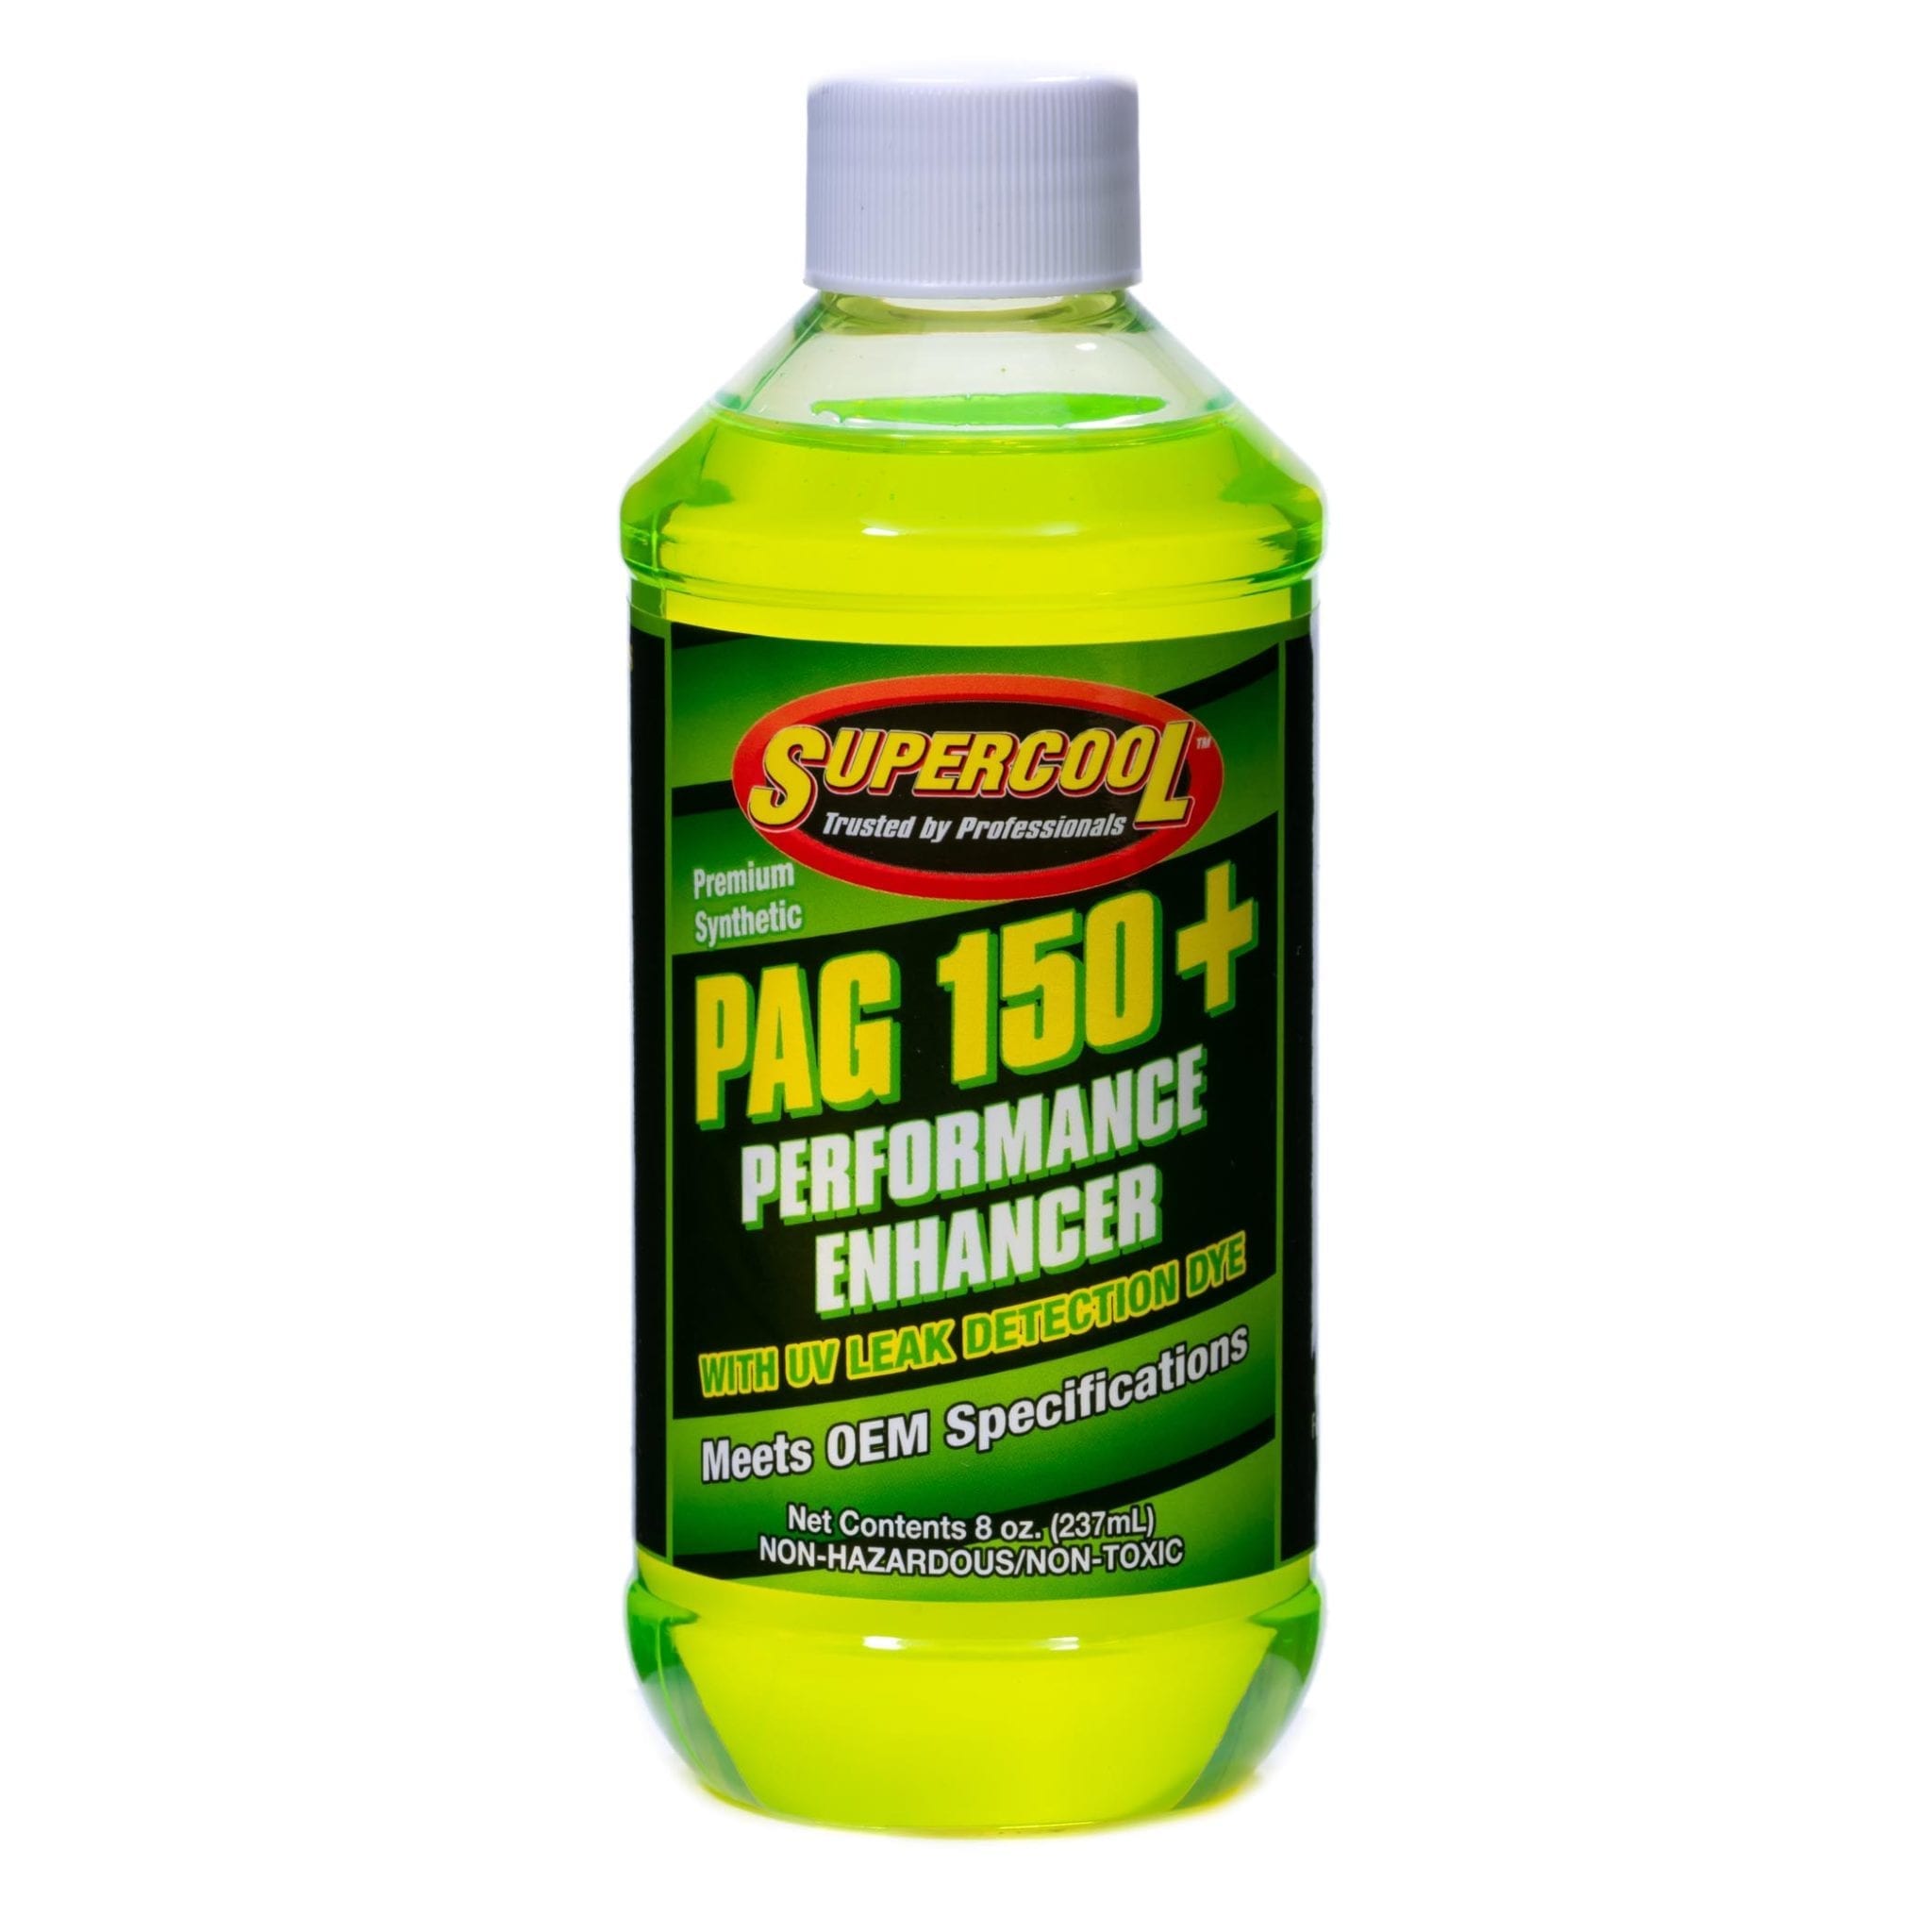 PAG Oil 150 Viskosität mit Performance Enhancer & U/V Dye 8oz